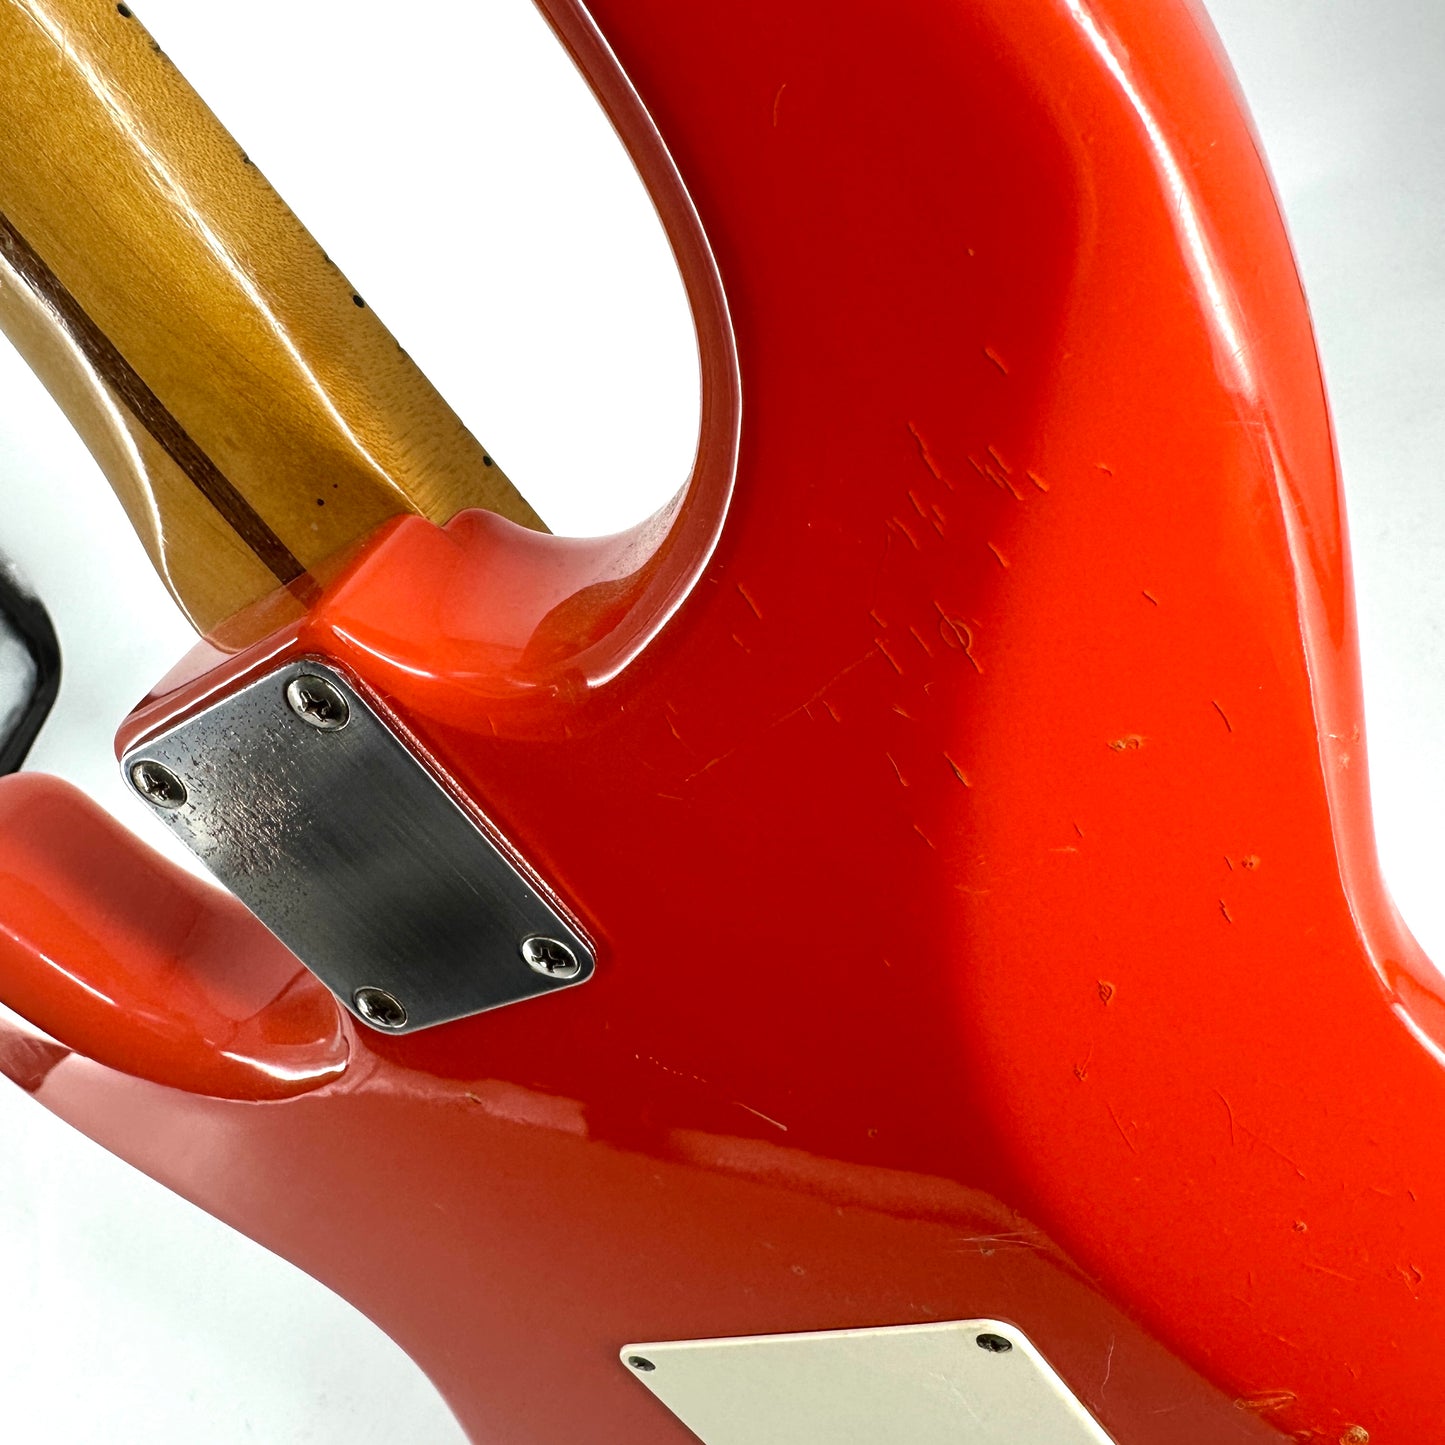 1991 Fender Squier Hank Marvin Japan Stratocaster – Fiesta Red